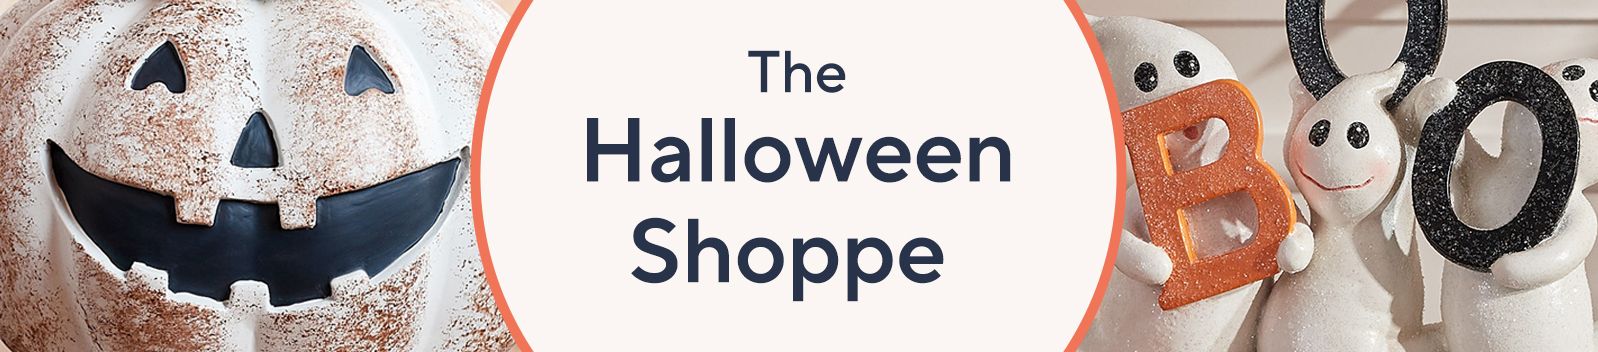 The Halloween Shoppe